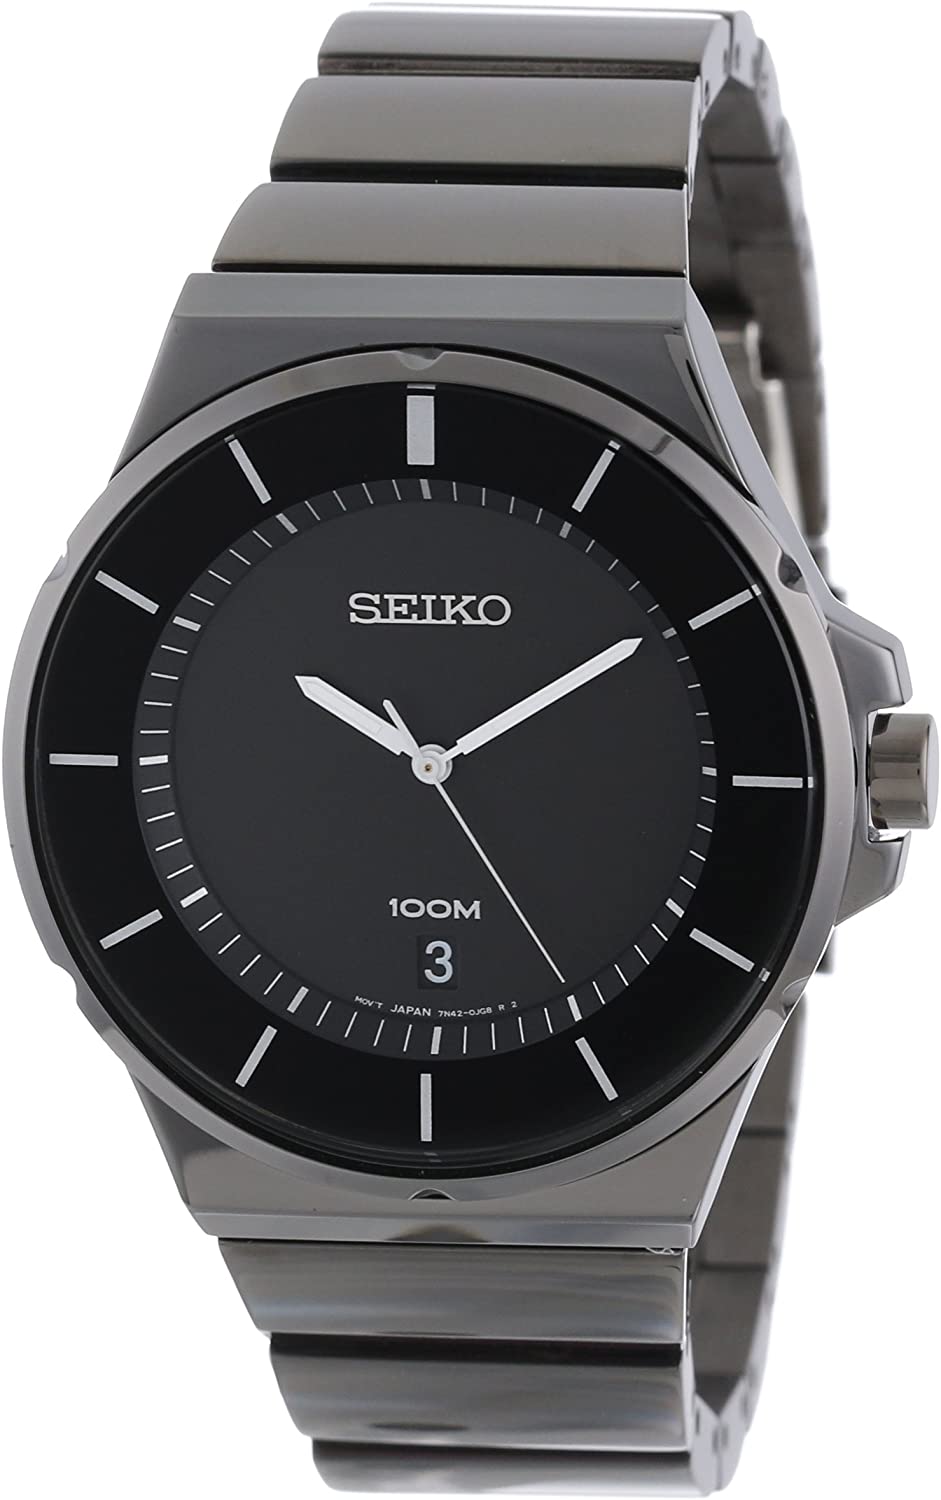 Seiko Men's SGEG21 New Collection Classic Black Ion Finish Watch